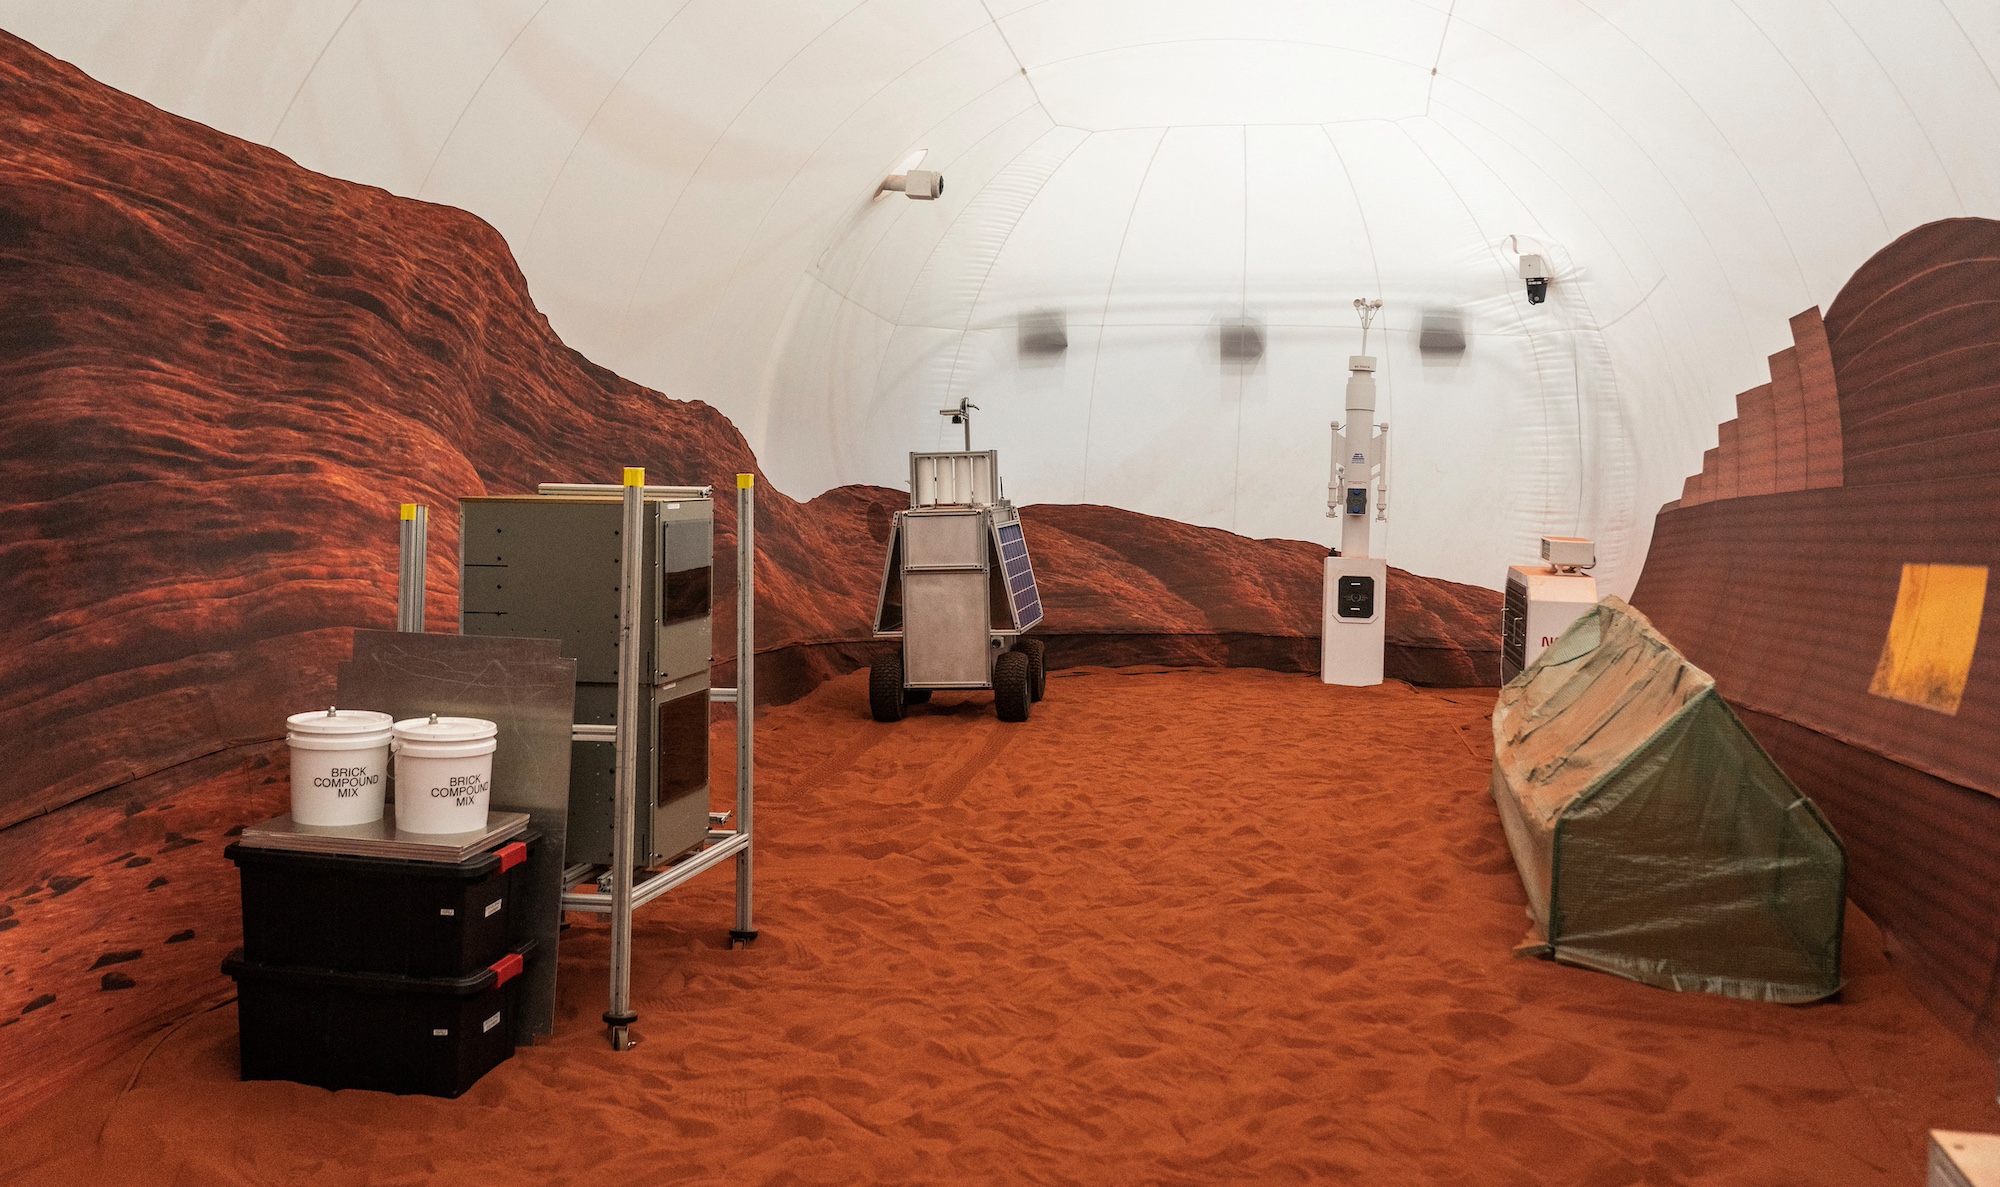 NASA Mars Simulated habitat